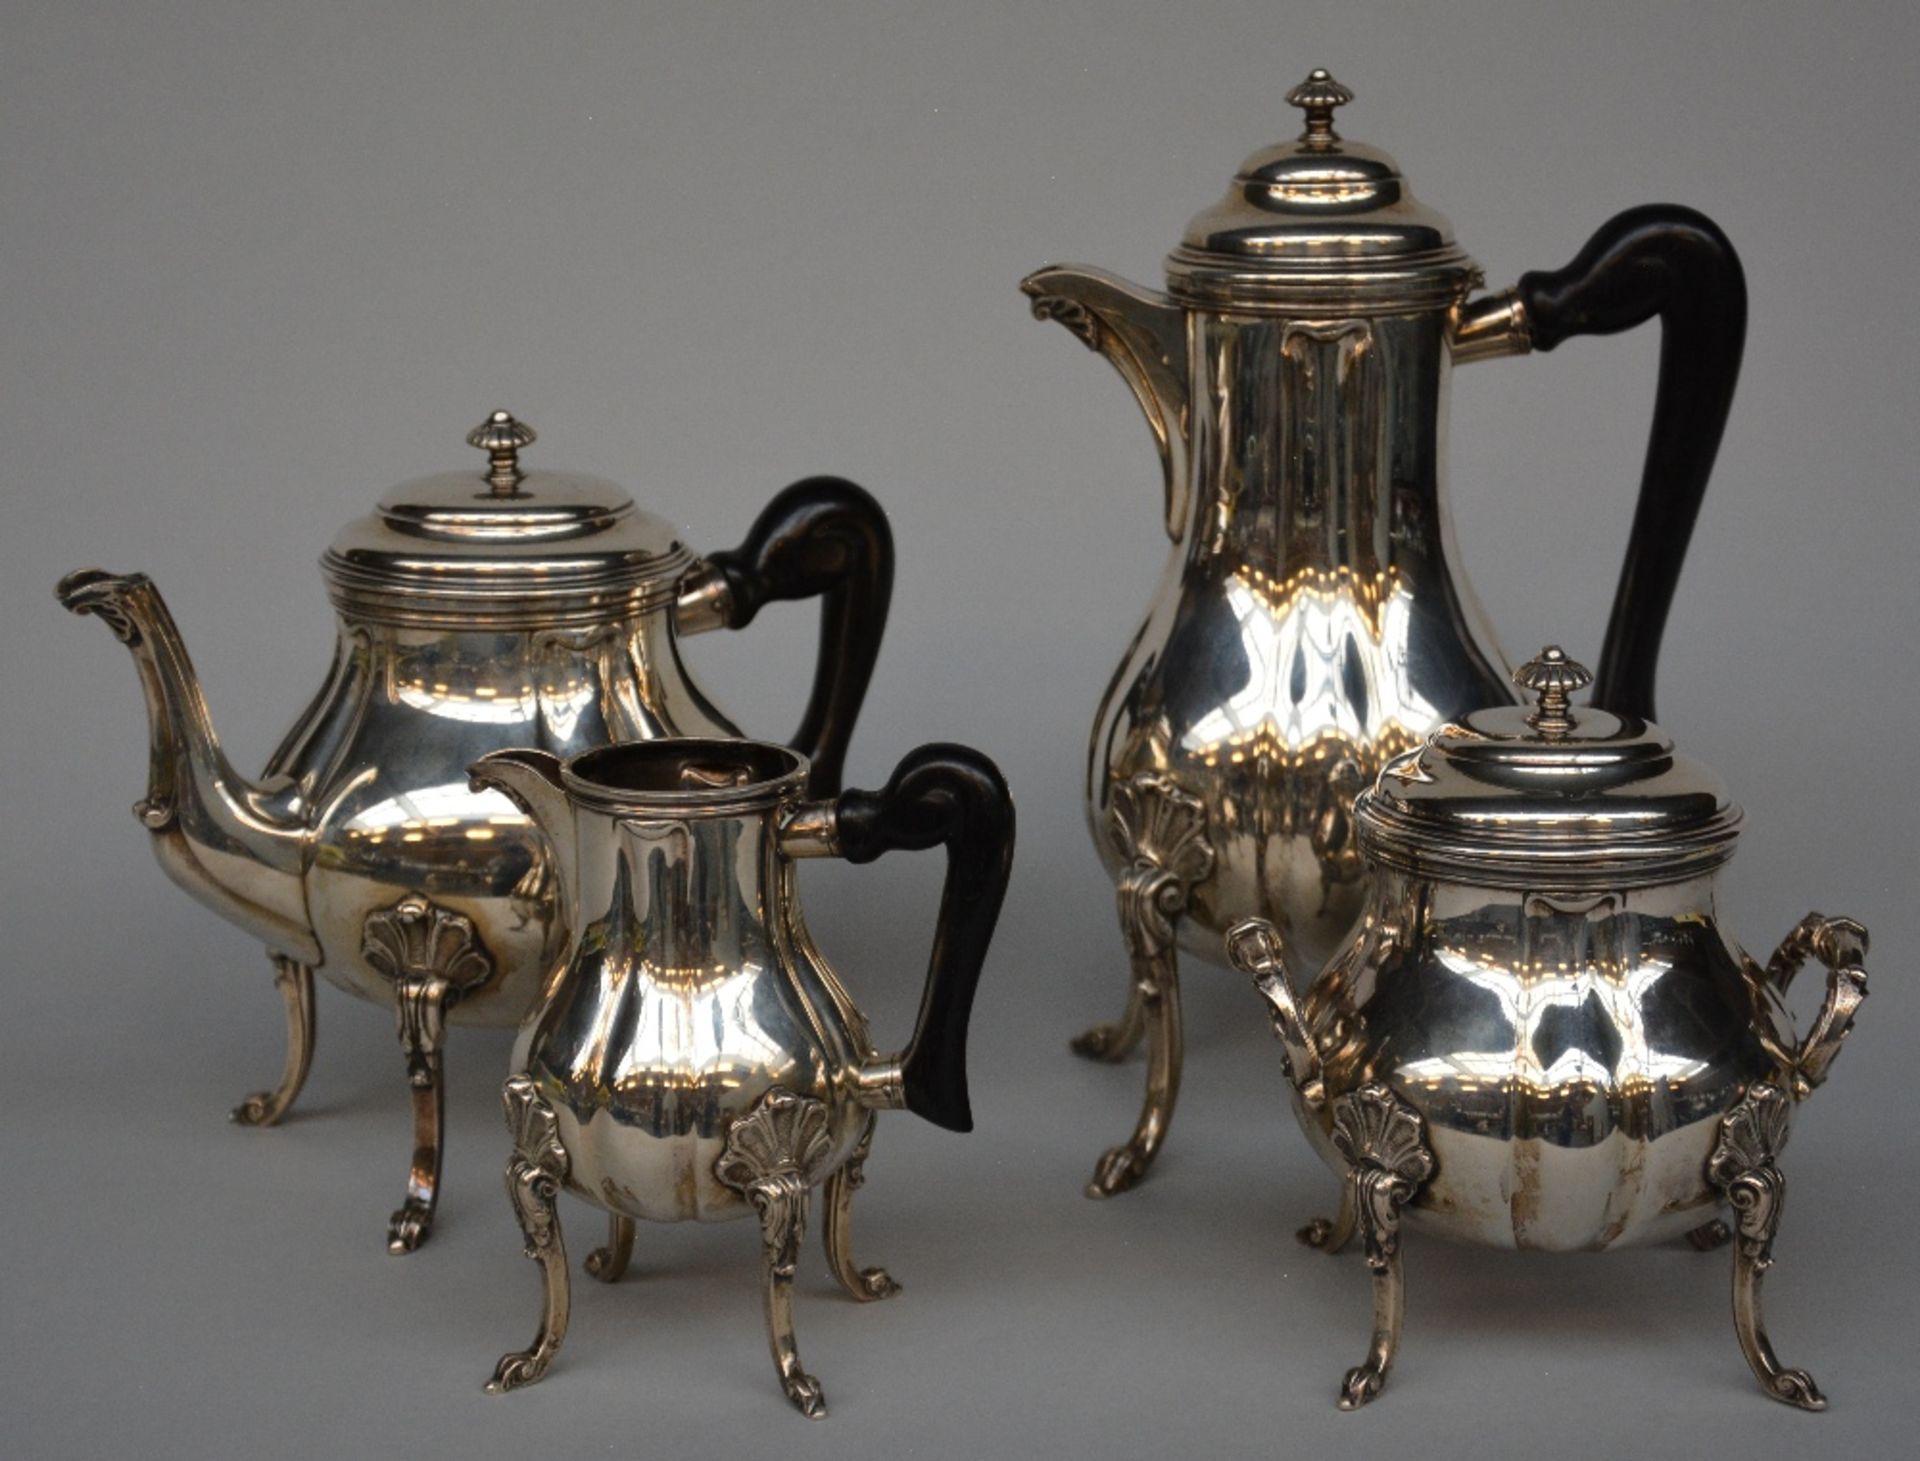 A four-piece silver coffee and tea set, Belgium 1868 - 1942, 800/000, makers' mark, Delheid, H